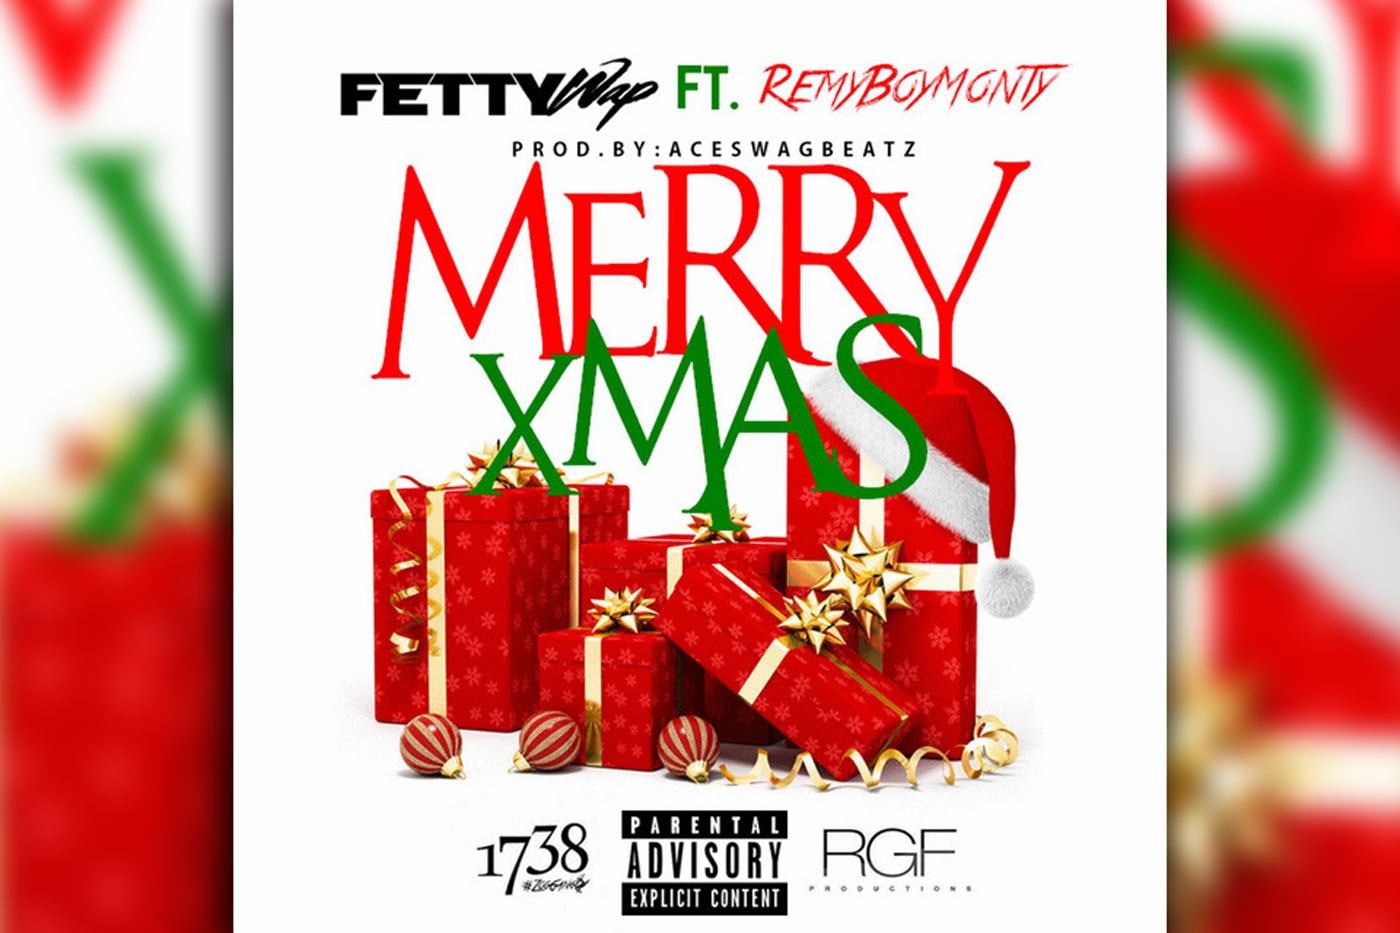 Fetty Wap Drops "Merry Xmas" Christmas Track